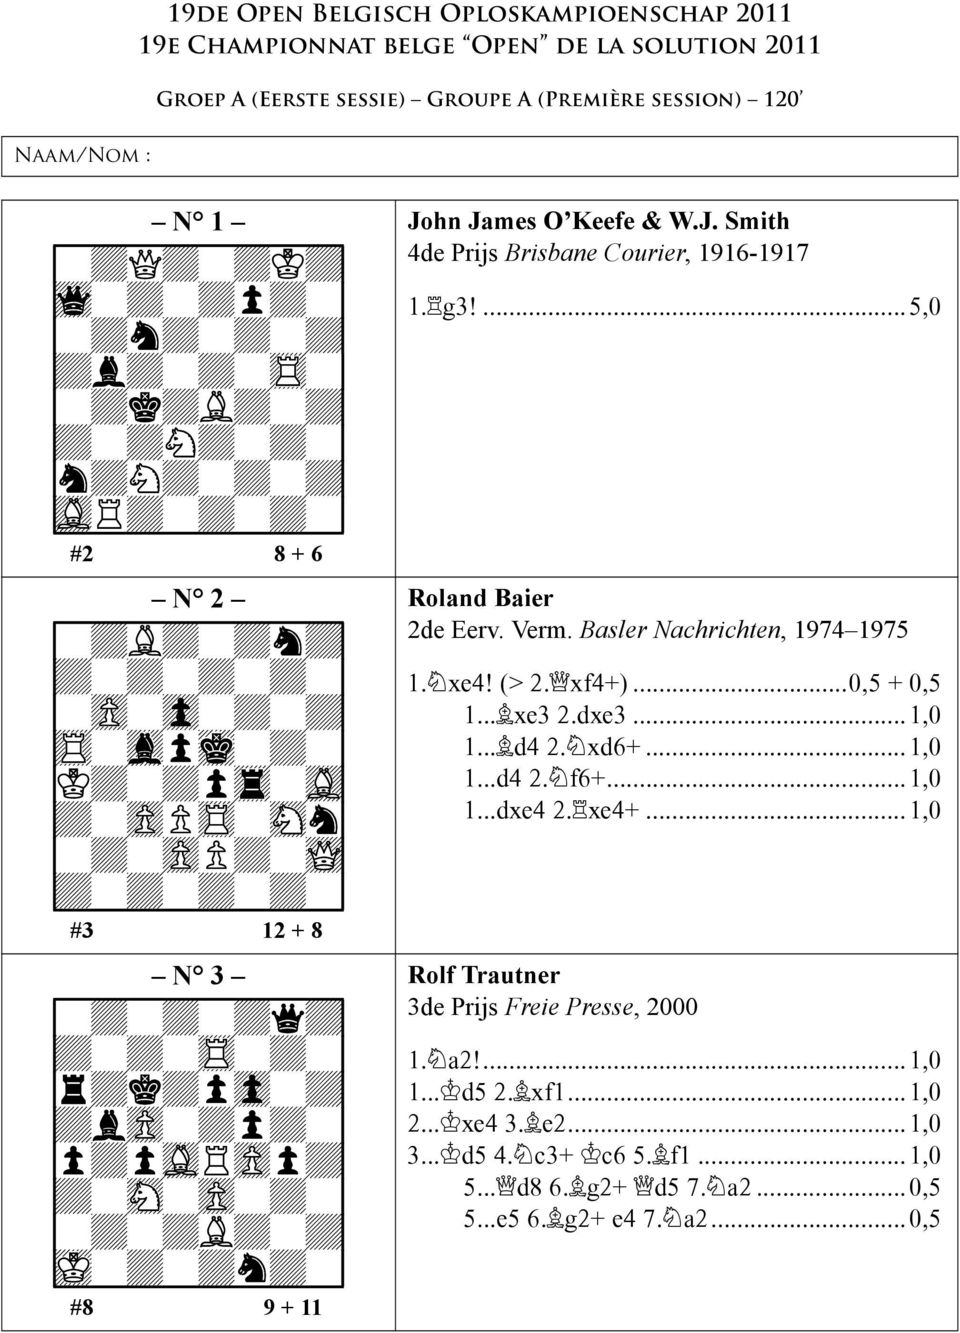 hn James O Keefe & W.J. Smith 4de Prijs Brisbane Courier, 1916-1917 1. g3!...5,0 Roland Baier 2de Eerv. Verm. Basler Nachrichten, 1974 1975 1. xe4! (> 2. xf4+)...0,5 + 0,5 1... xe3 2.dxe3...1,0 1.